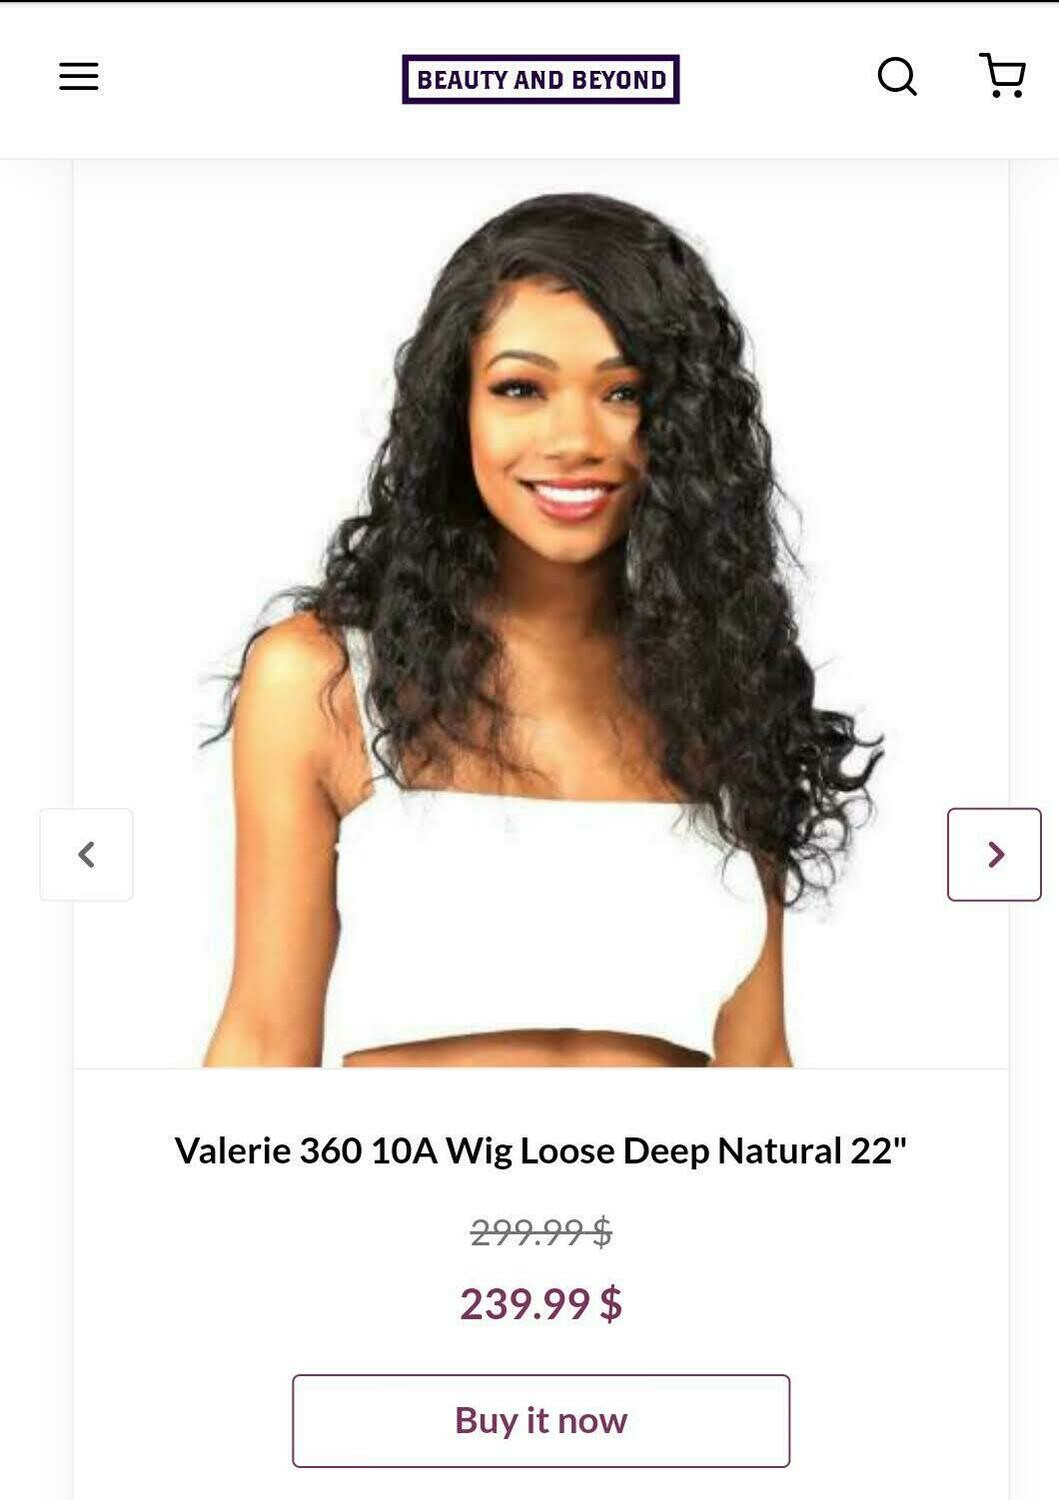 Valerie 360 10A Wig Loose Deep Natural 22"